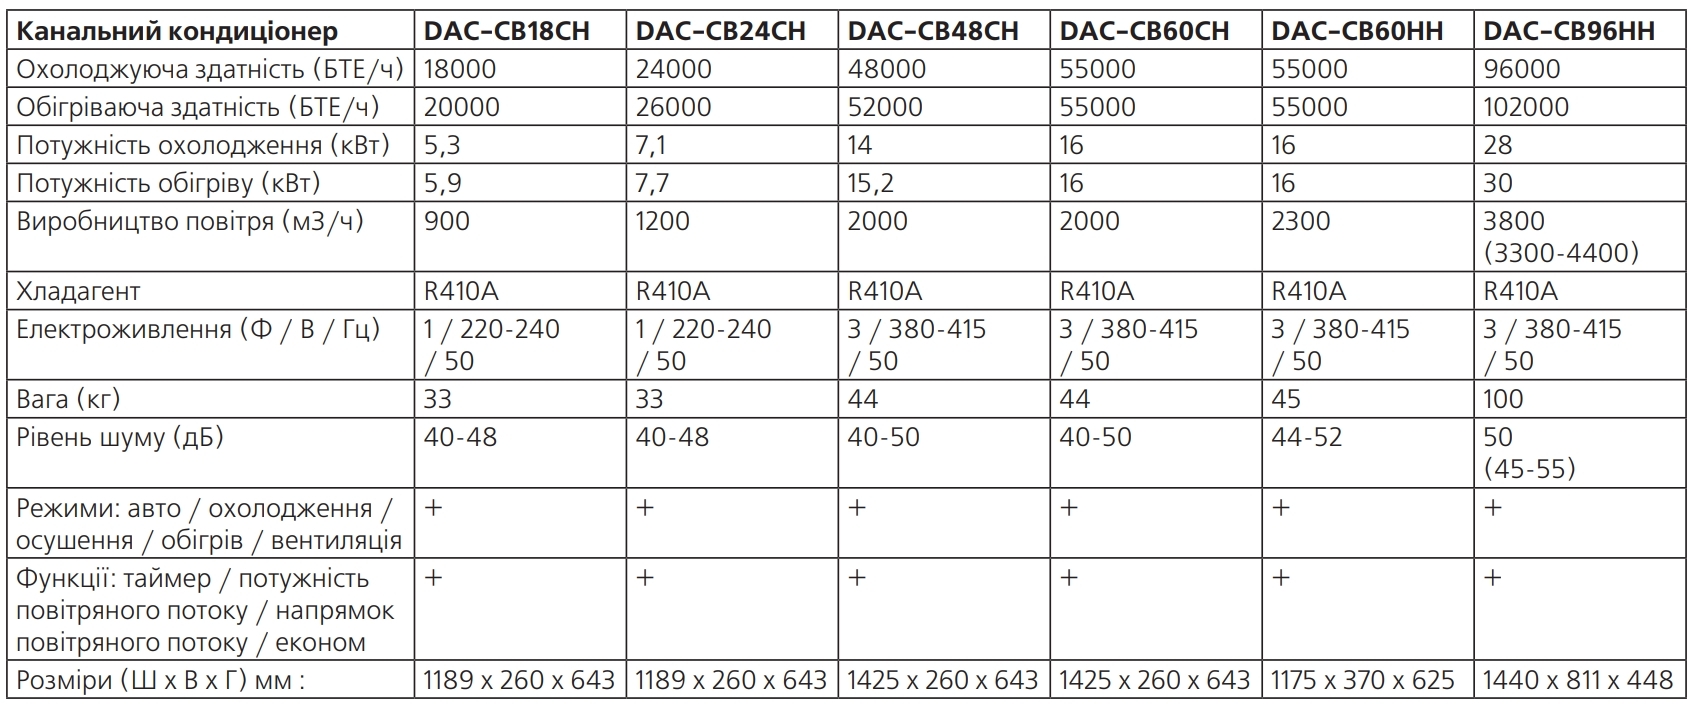 Digital DAC-CB60HH Характеристики